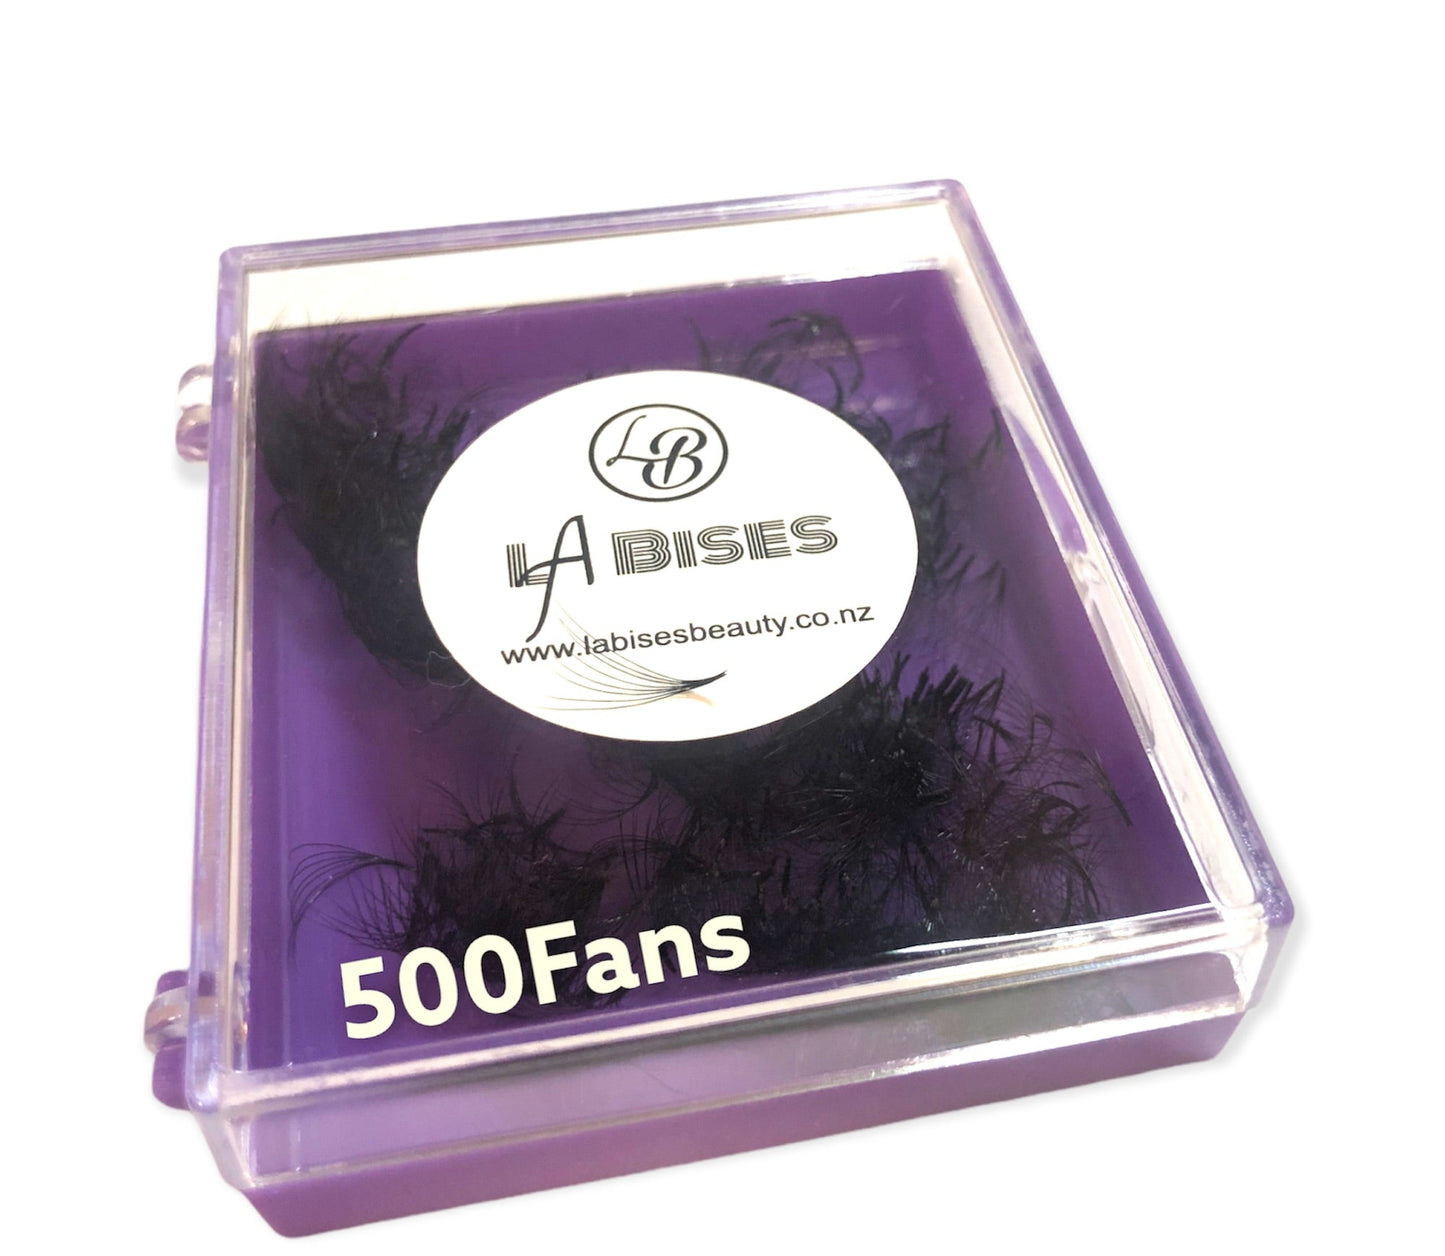 4D - 500 Fans  CC Curl -0.07mm  Pre-handmade Volume Fan Eyelash Extensions Supply